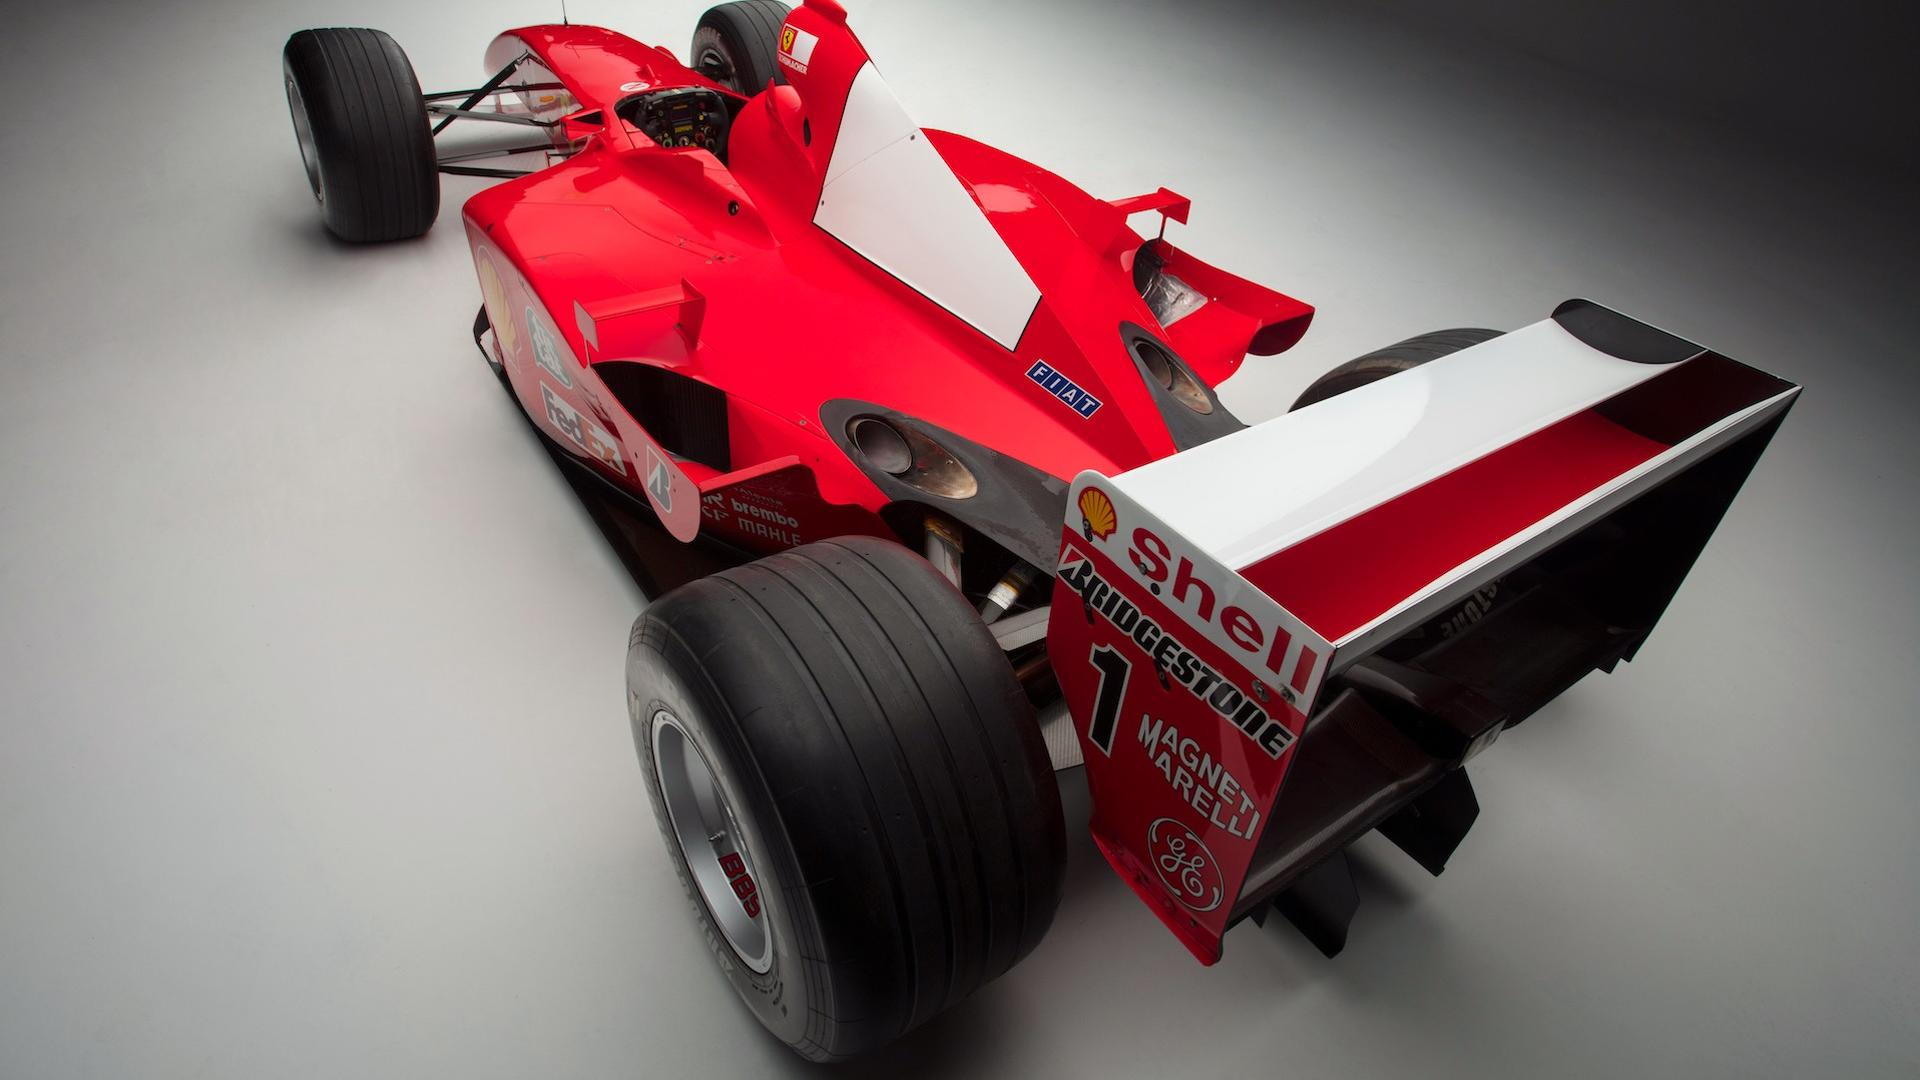 Michael Schumacher’s Ferrari F2001 race car from the 2001 Formula 1 World Championship